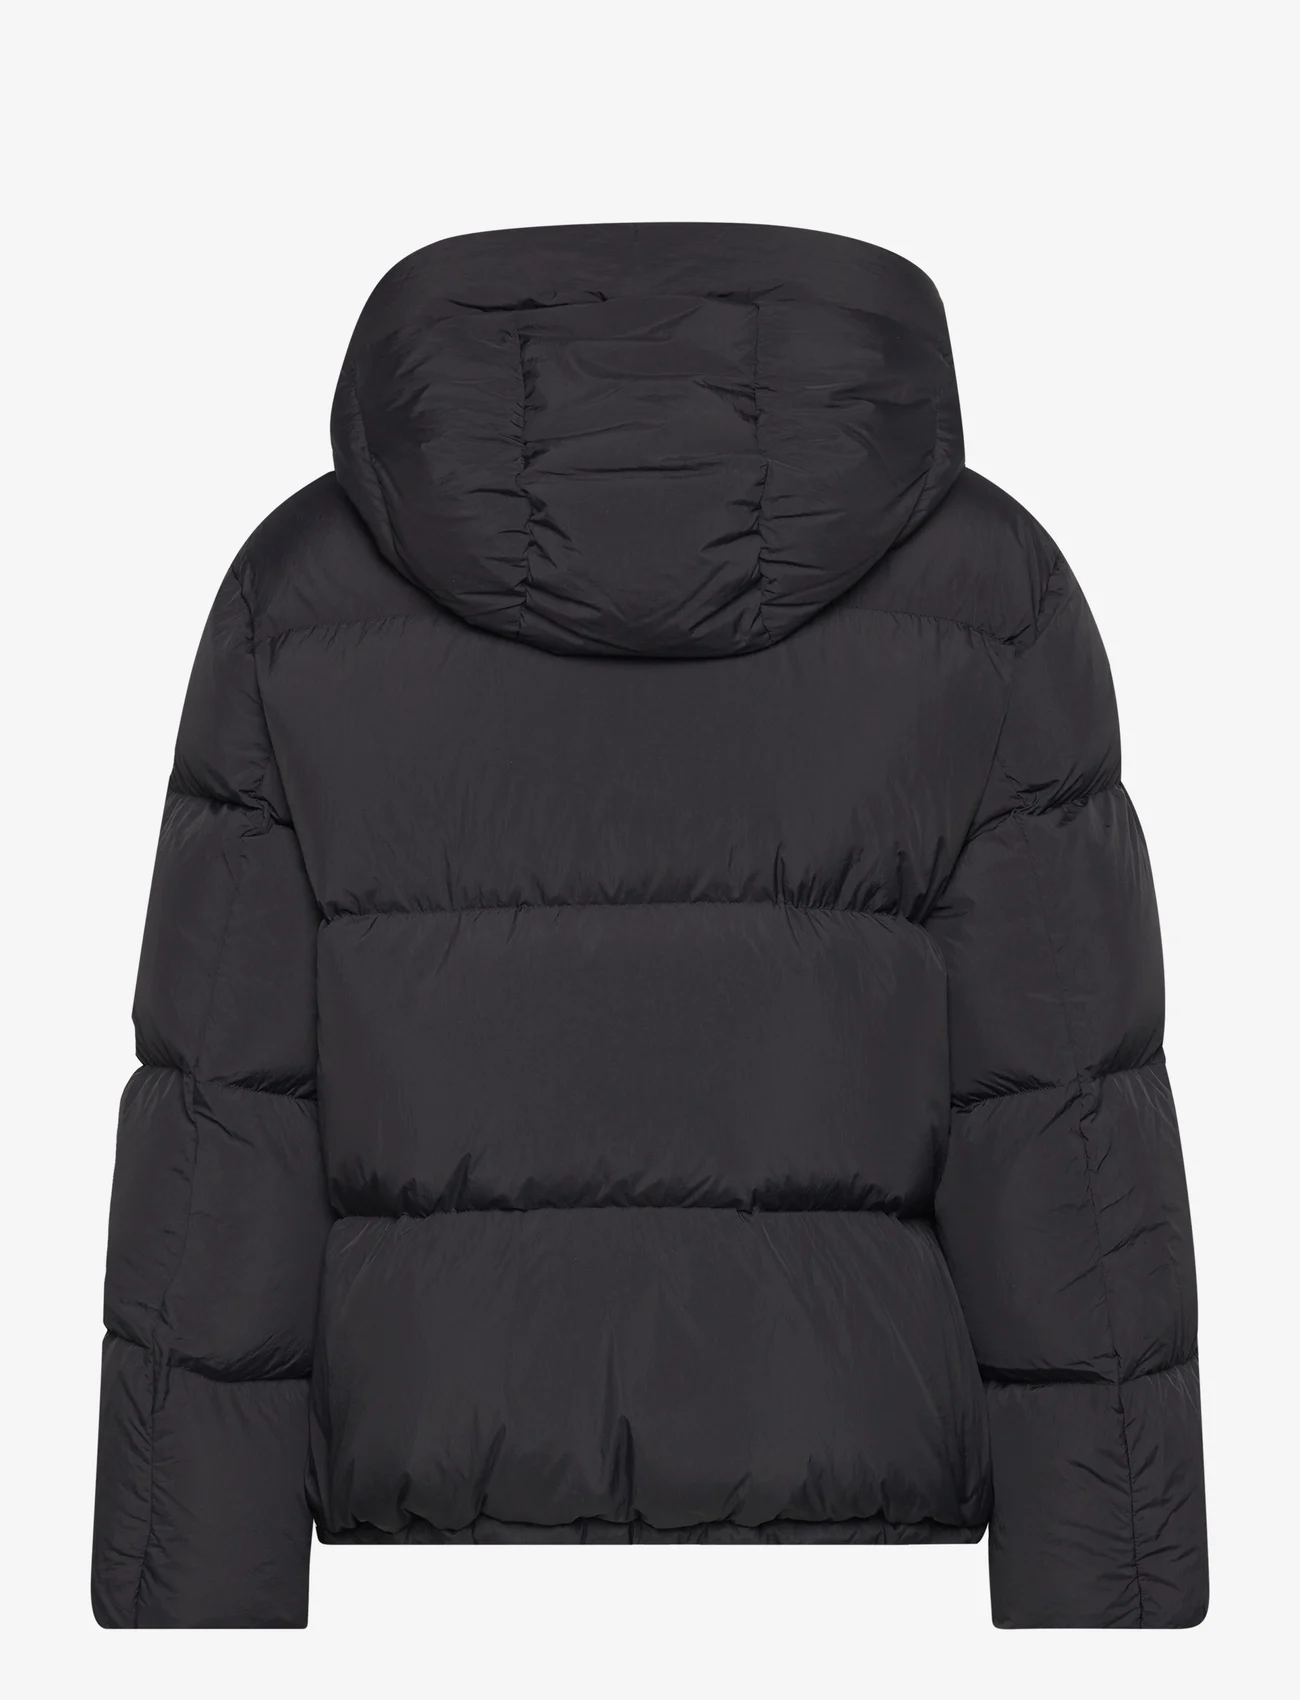 GANT - SHORT DOWN JACKET - winter jacket - ebony black - 1